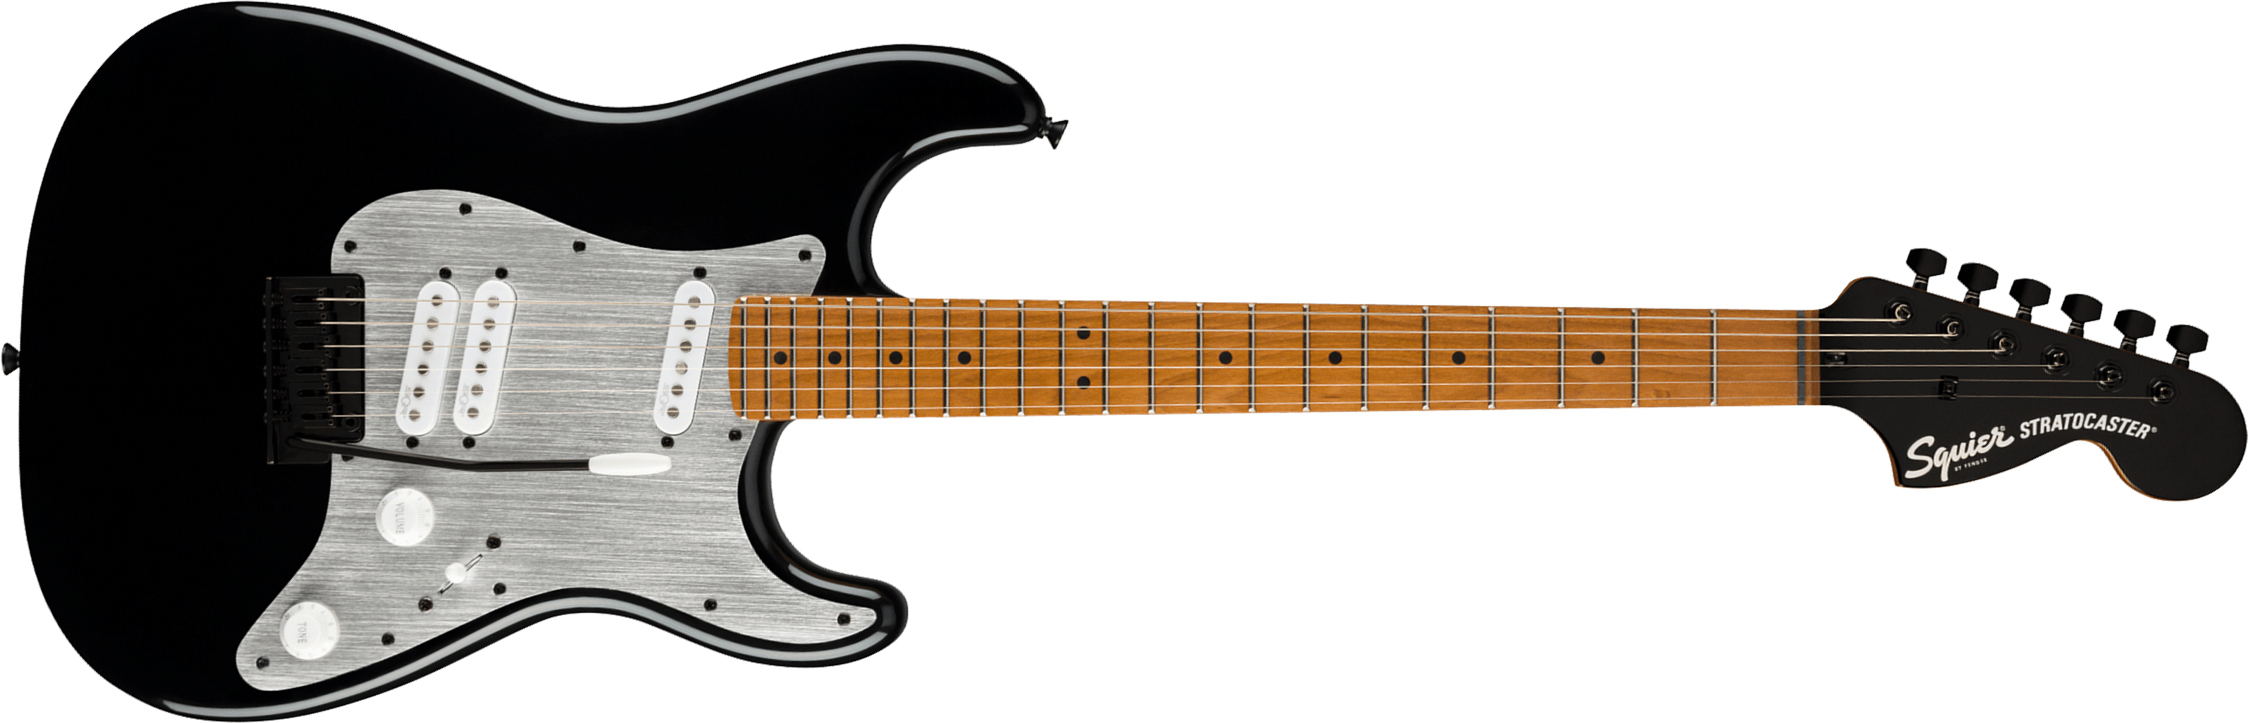 Squier Strat Contemporary Special Sss Trem Mn - Black - Guitarra eléctrica con forma de str. - Main picture